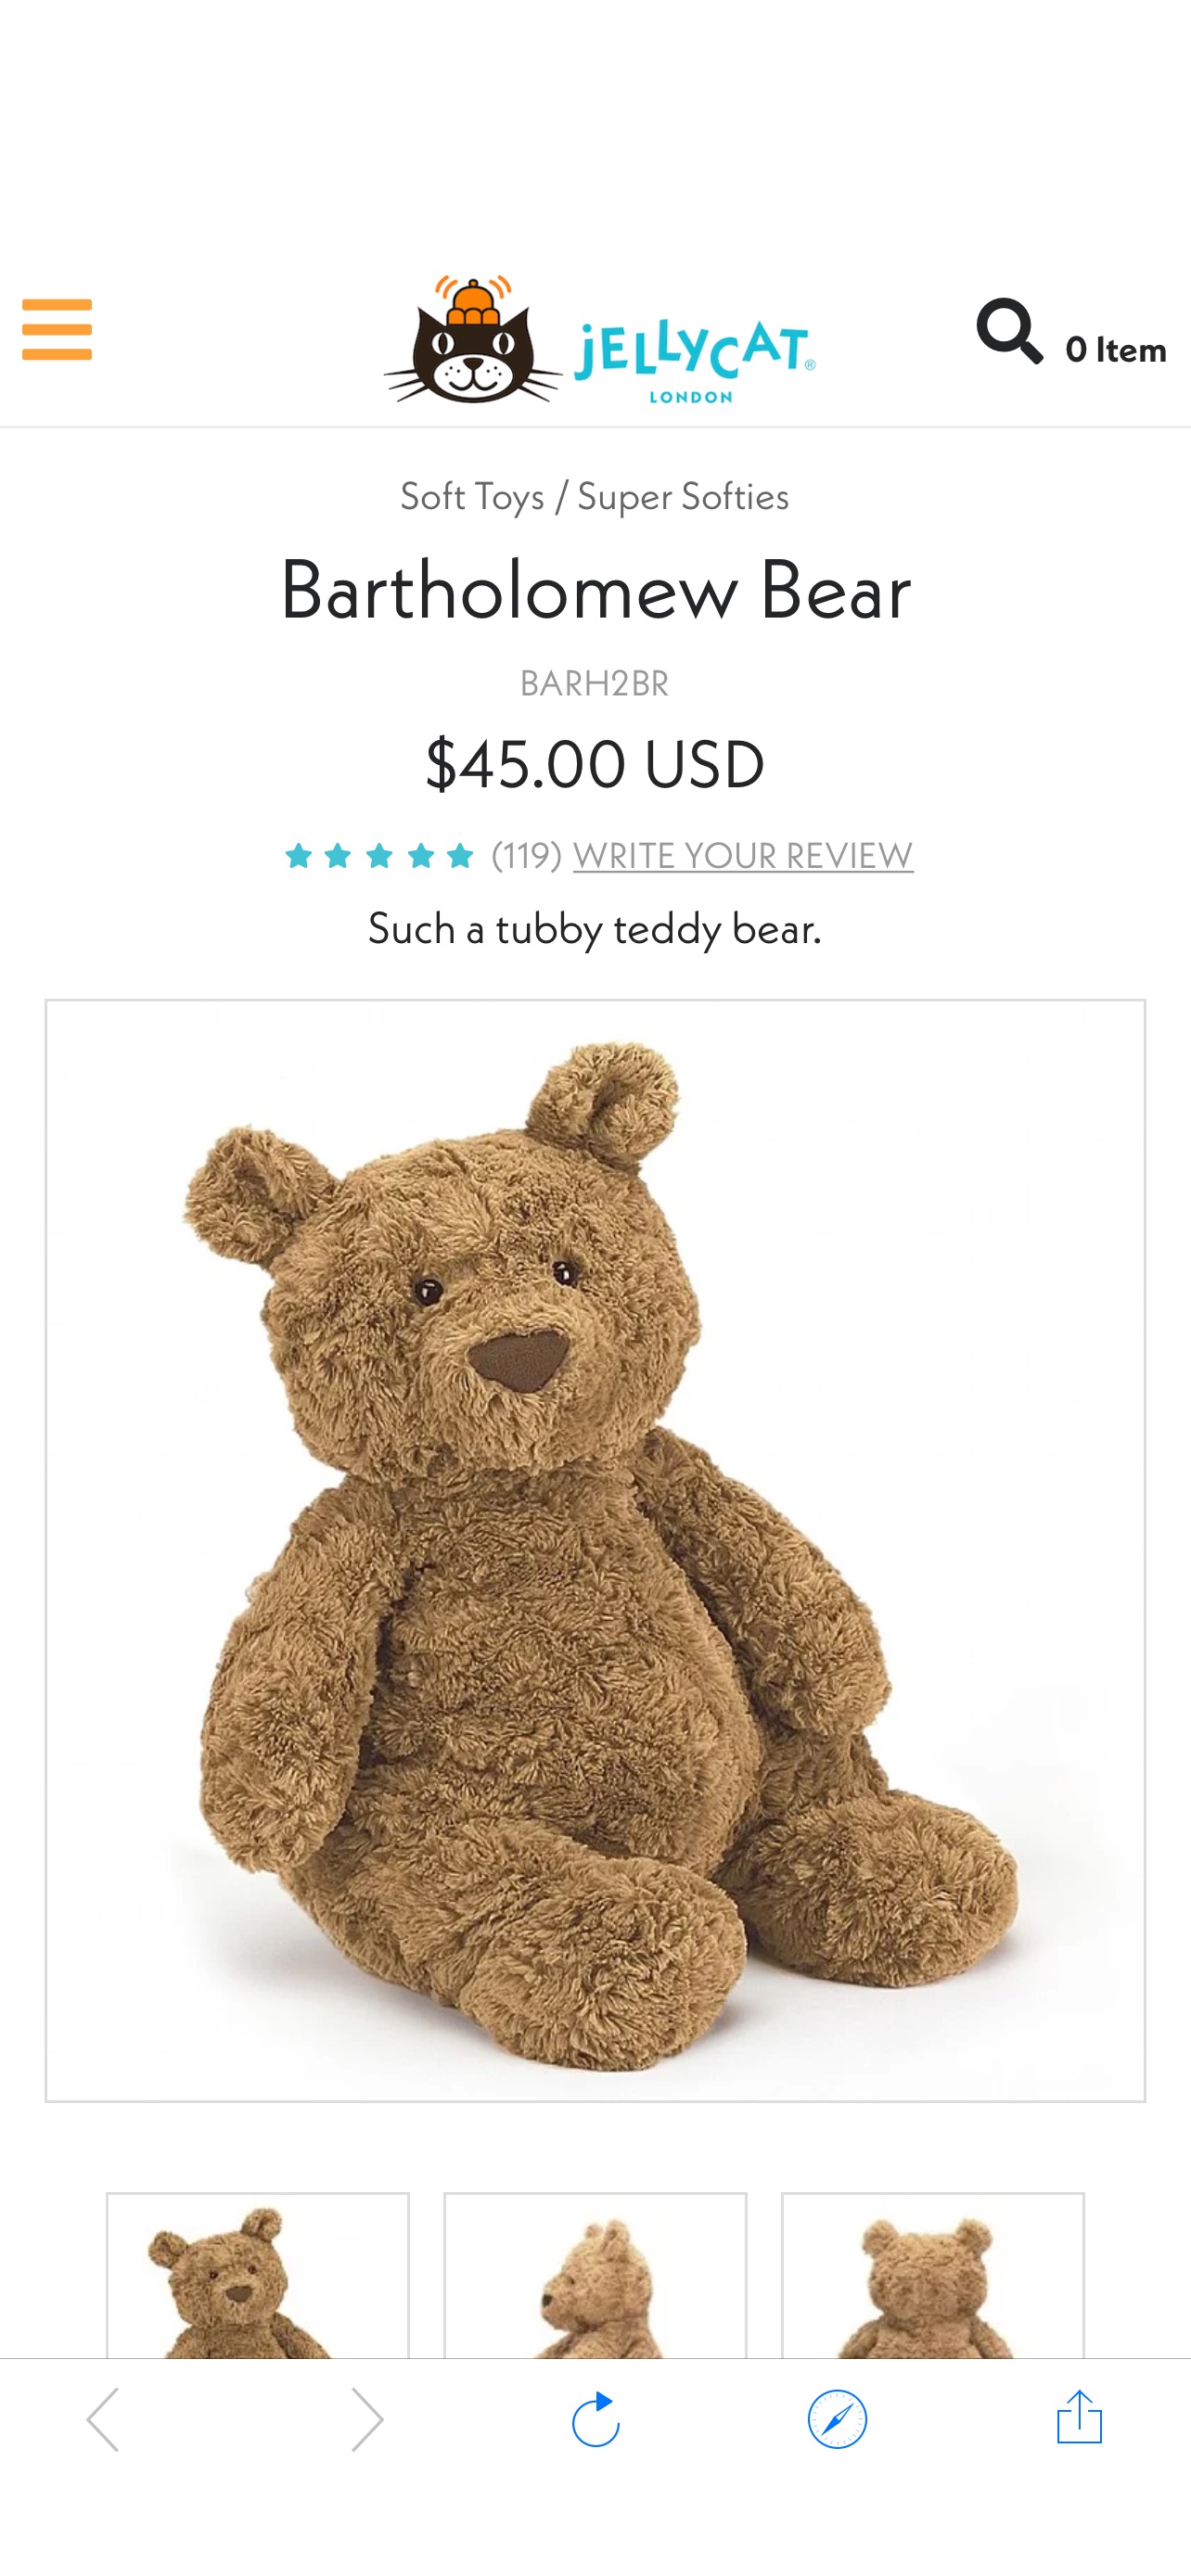 Buy Bartholomew Bear - Online at Jellycat.com